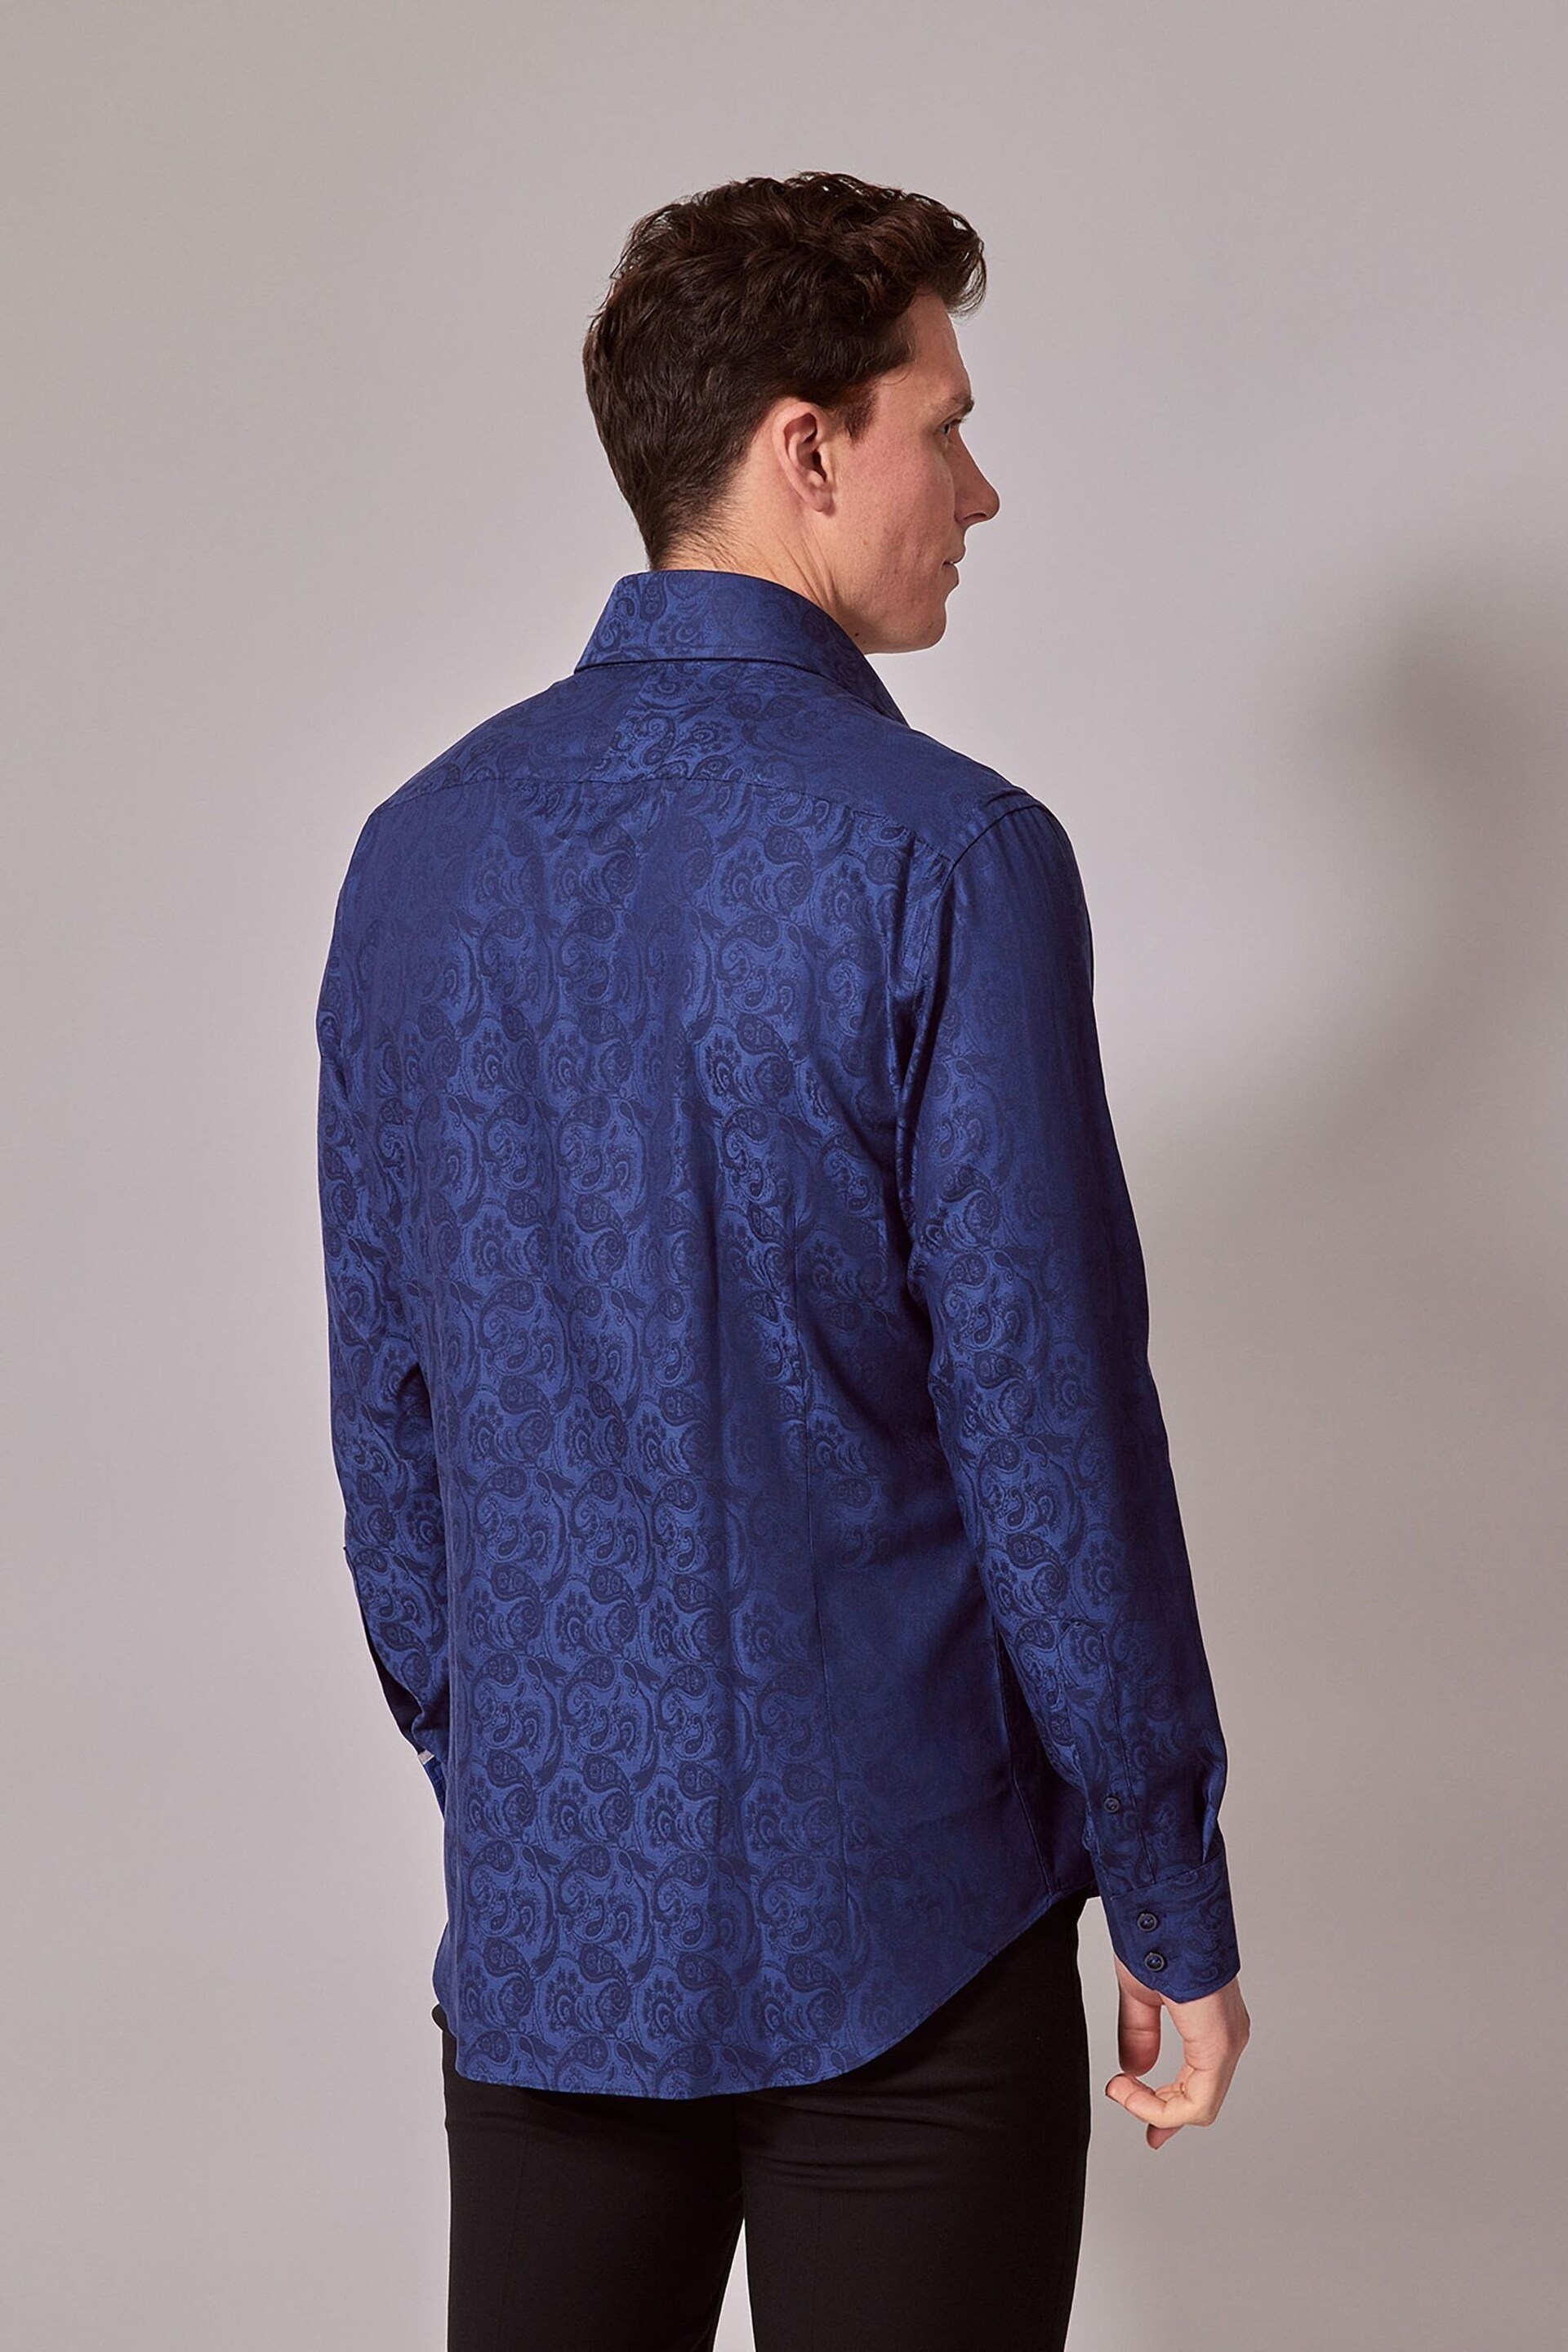 Hawes & Curtis Slim Blue Paisley Jacquard Mid Collar Shirt - Image 2 of 4